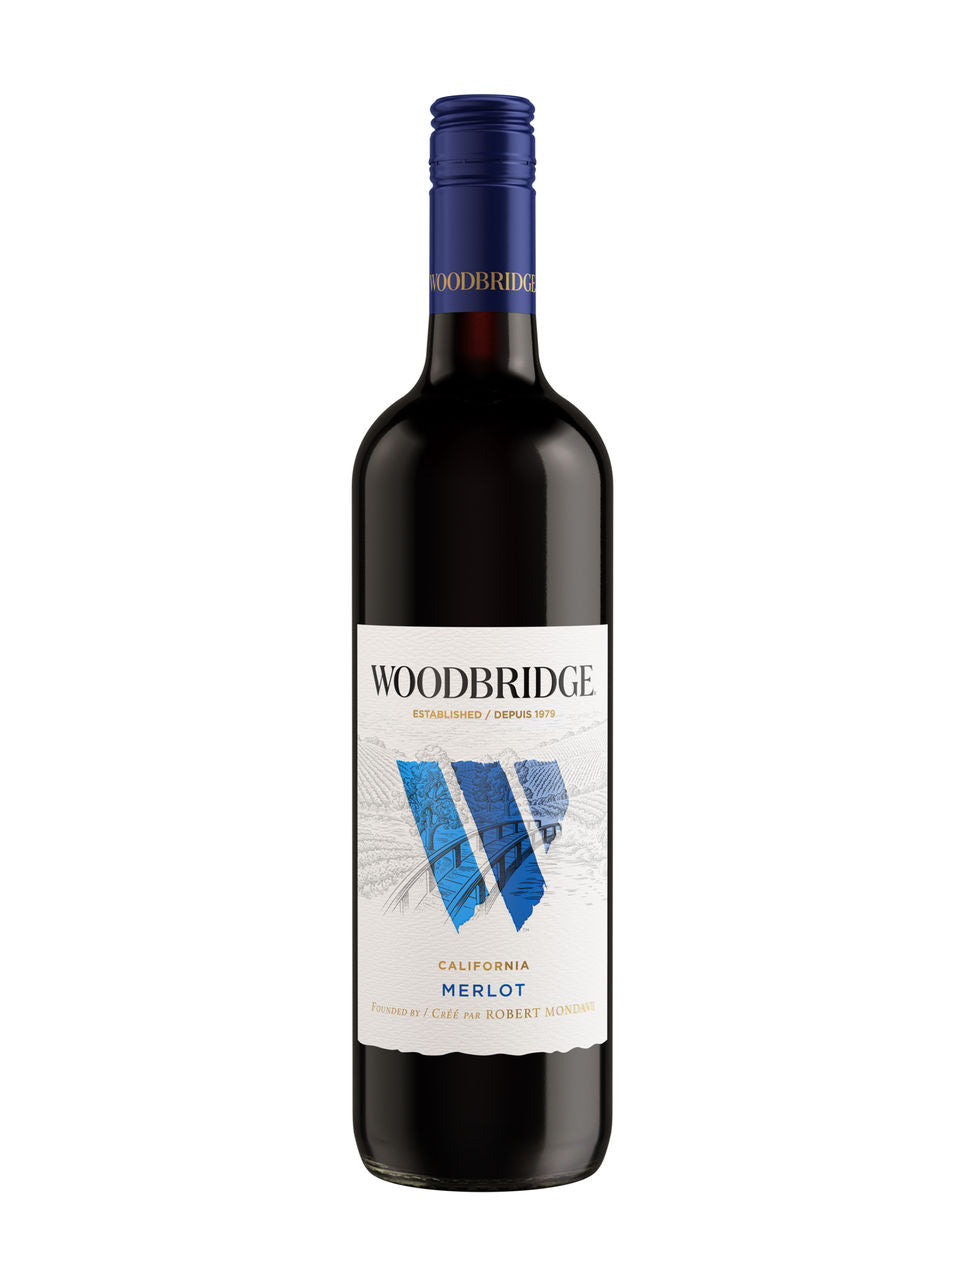 Woodbridge By Robert Mondavi Merlot 750 ml bottle